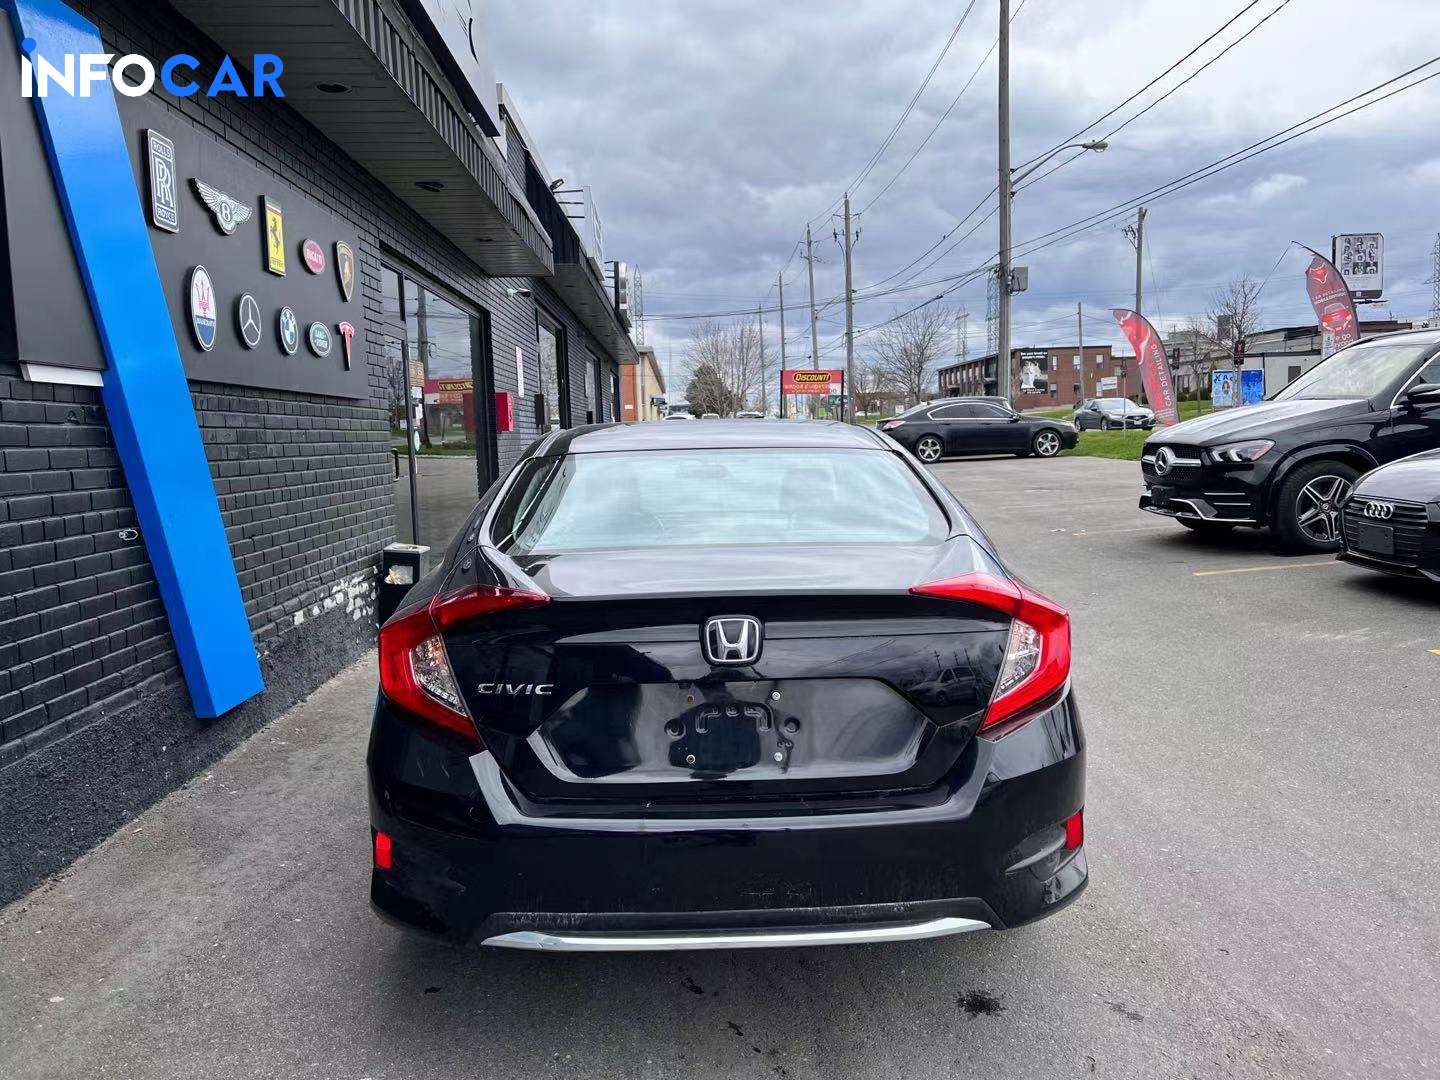 2019 Honda Civic ex - INFOCAR - Toronto Auto Trading Platform